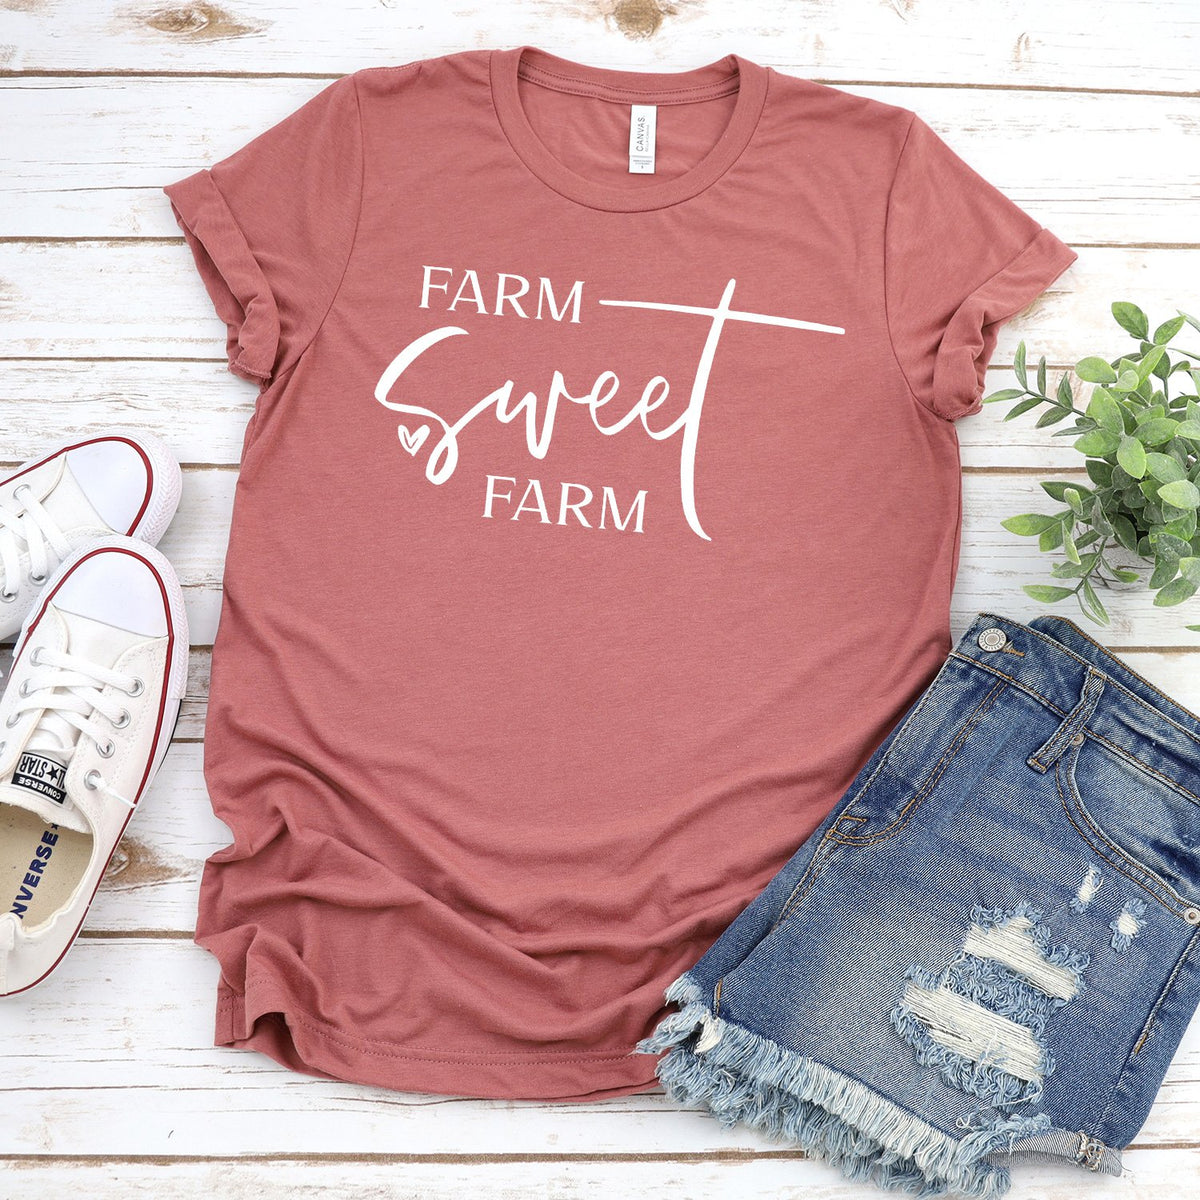 Farm Sweet Farm - Short Sleeve Tee Shirt